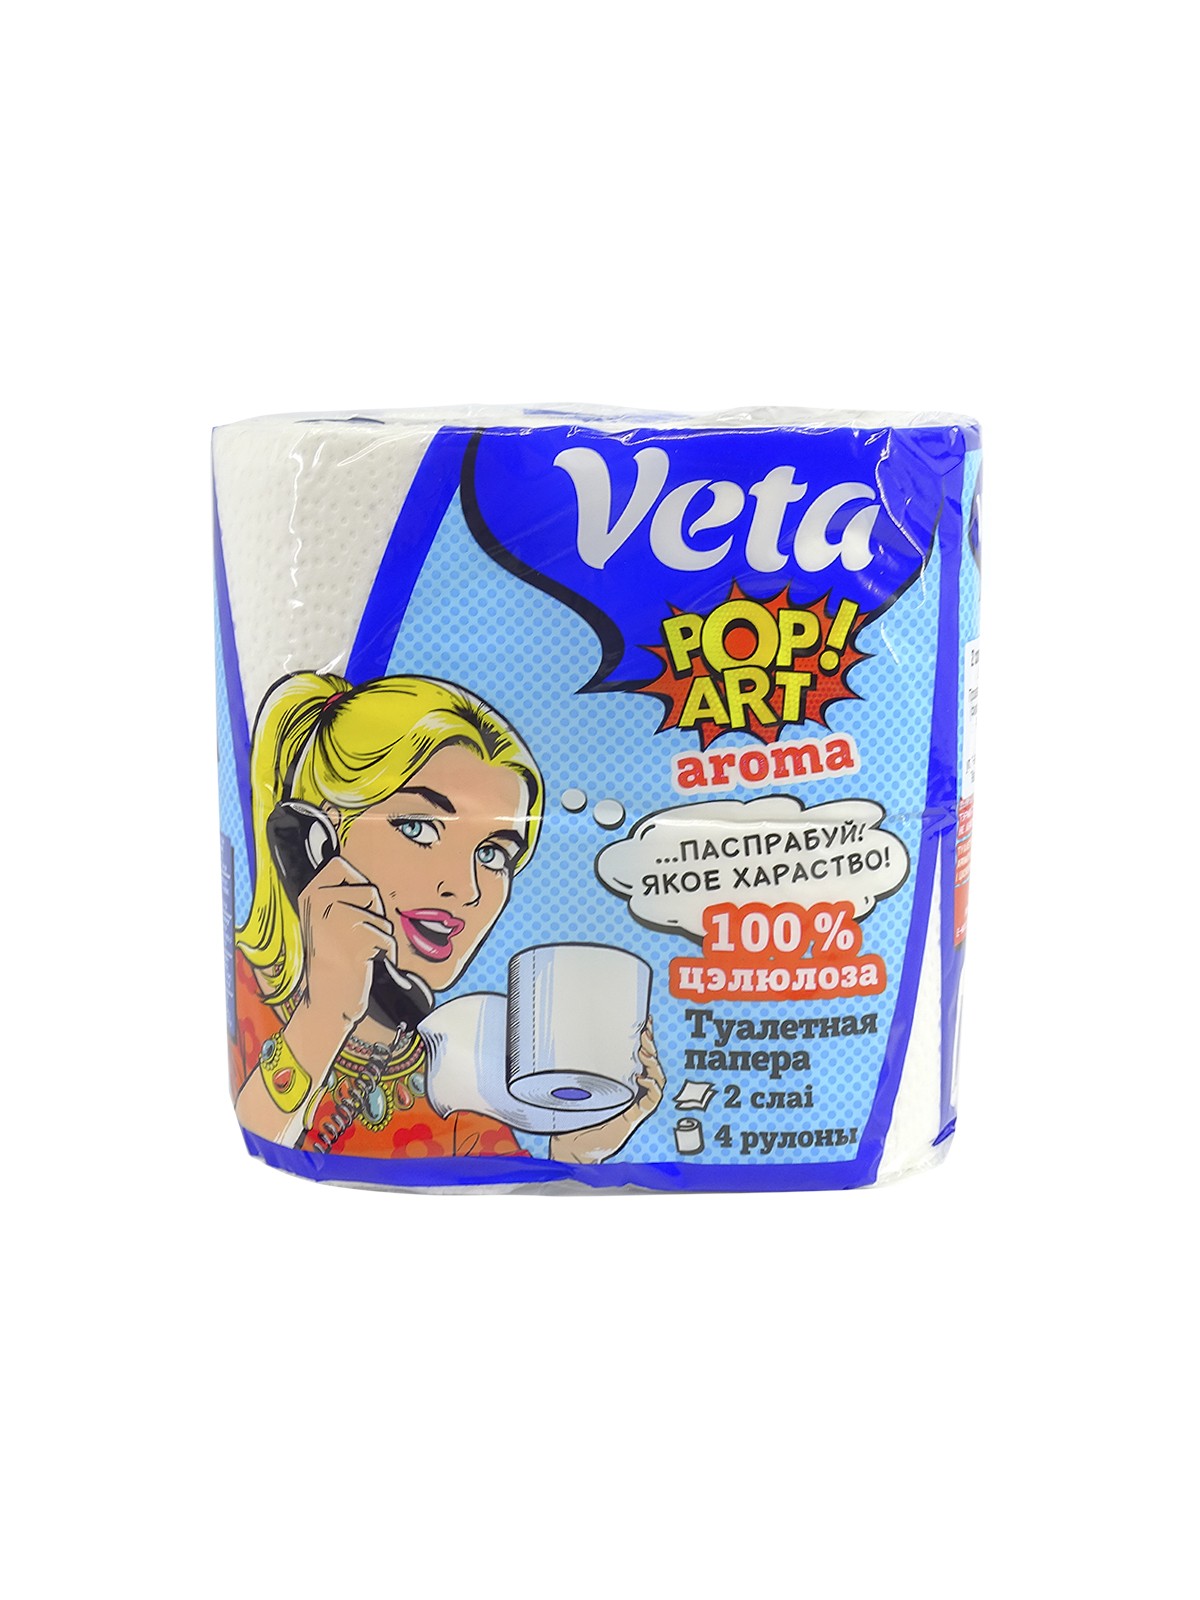 Бумага туалетная двухслойная "Veta Pop Art aroma" на втулке, ароматиз. 1*4 рулона